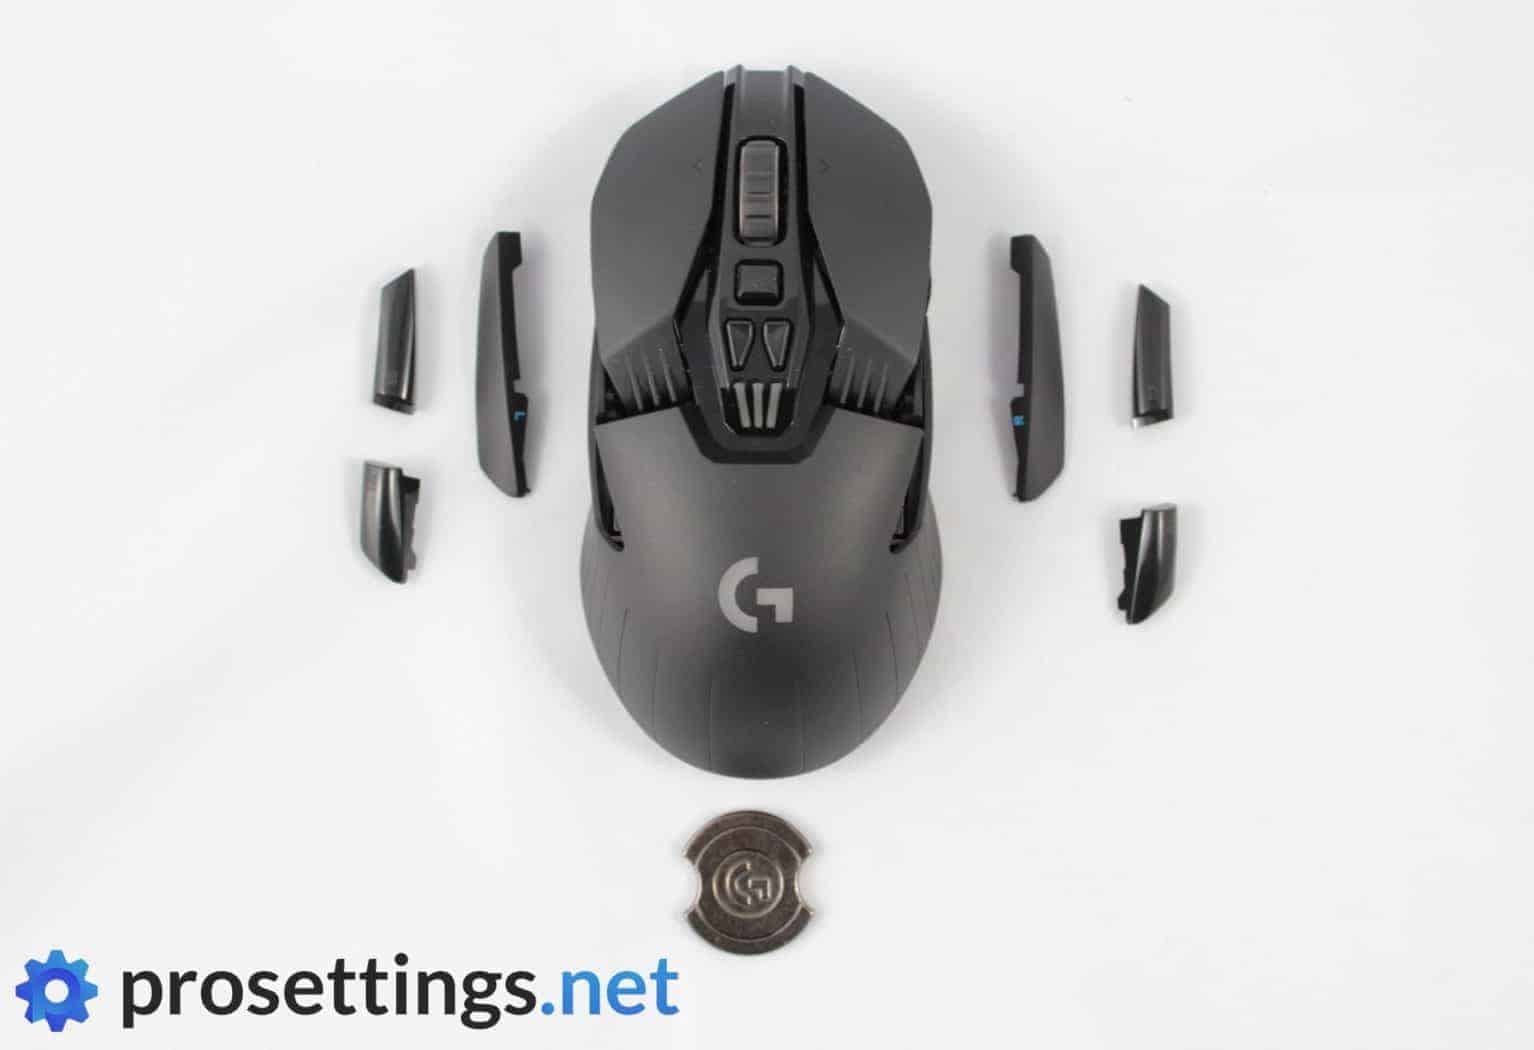 Logitech G903 Review Mouse Deconstructed